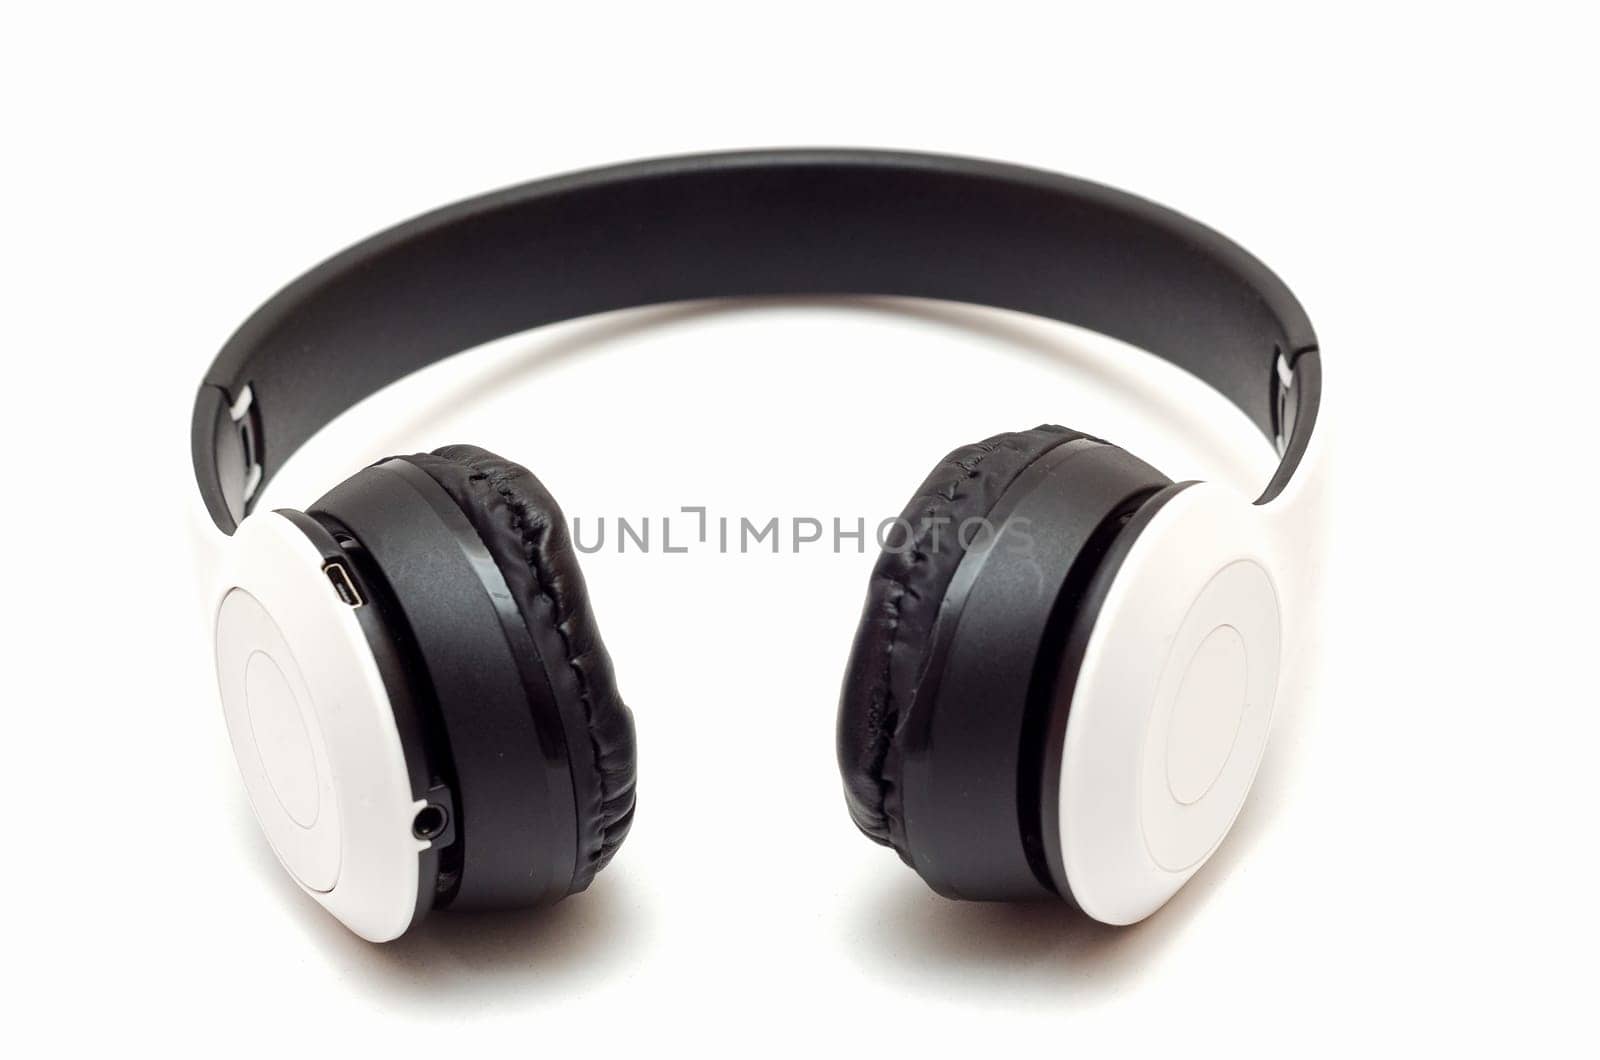 white bluetooth stereo Hi-Fi headphones isolated on white background.